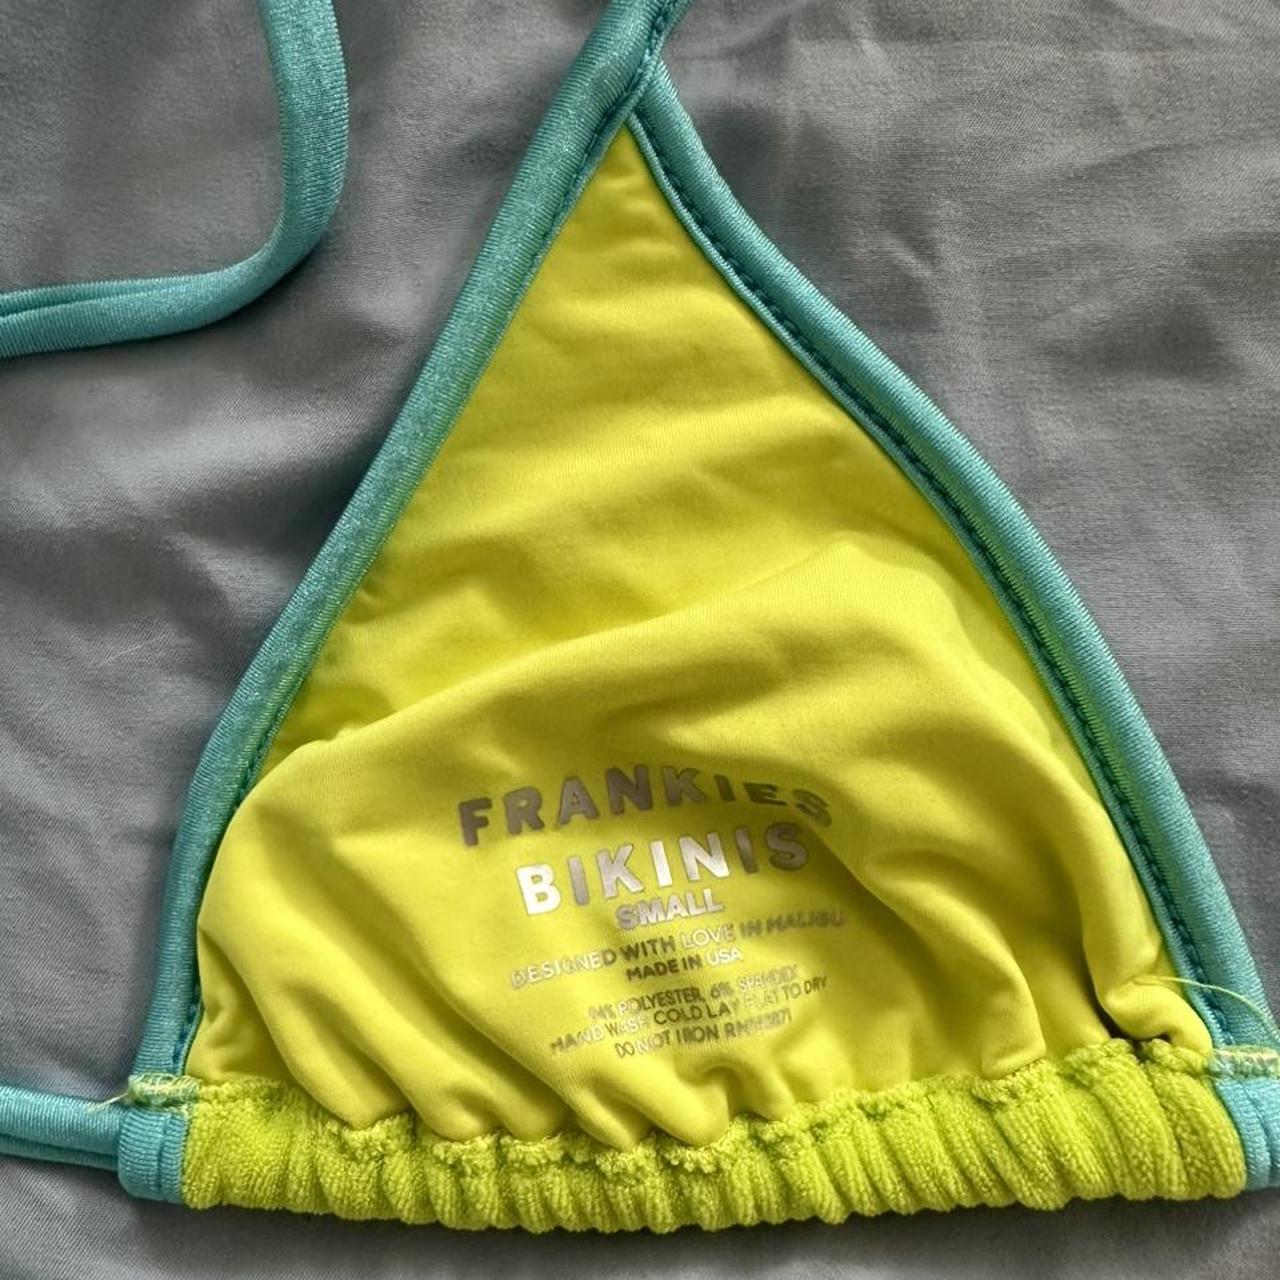 Frankies Bikinis Women's Suit | Depop